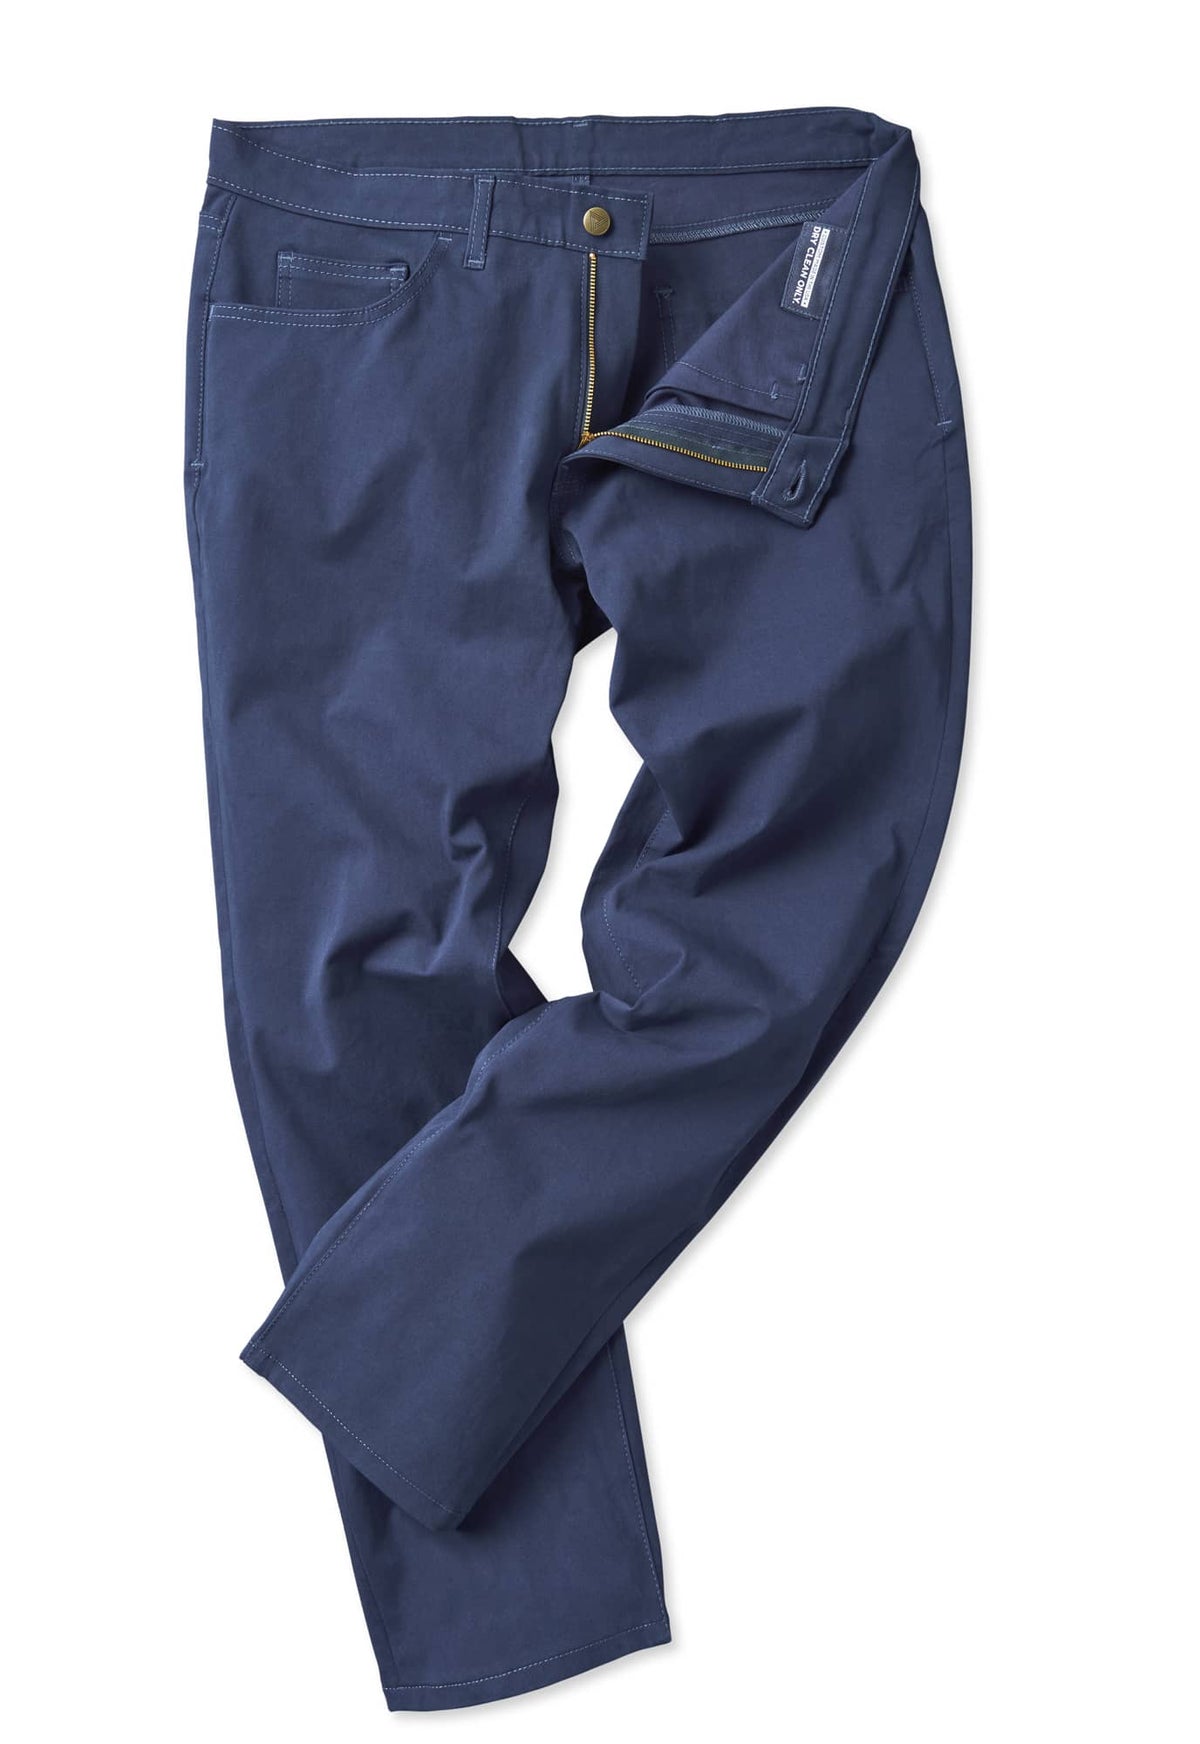 Blue sports jacket and chino pants | Hockerty